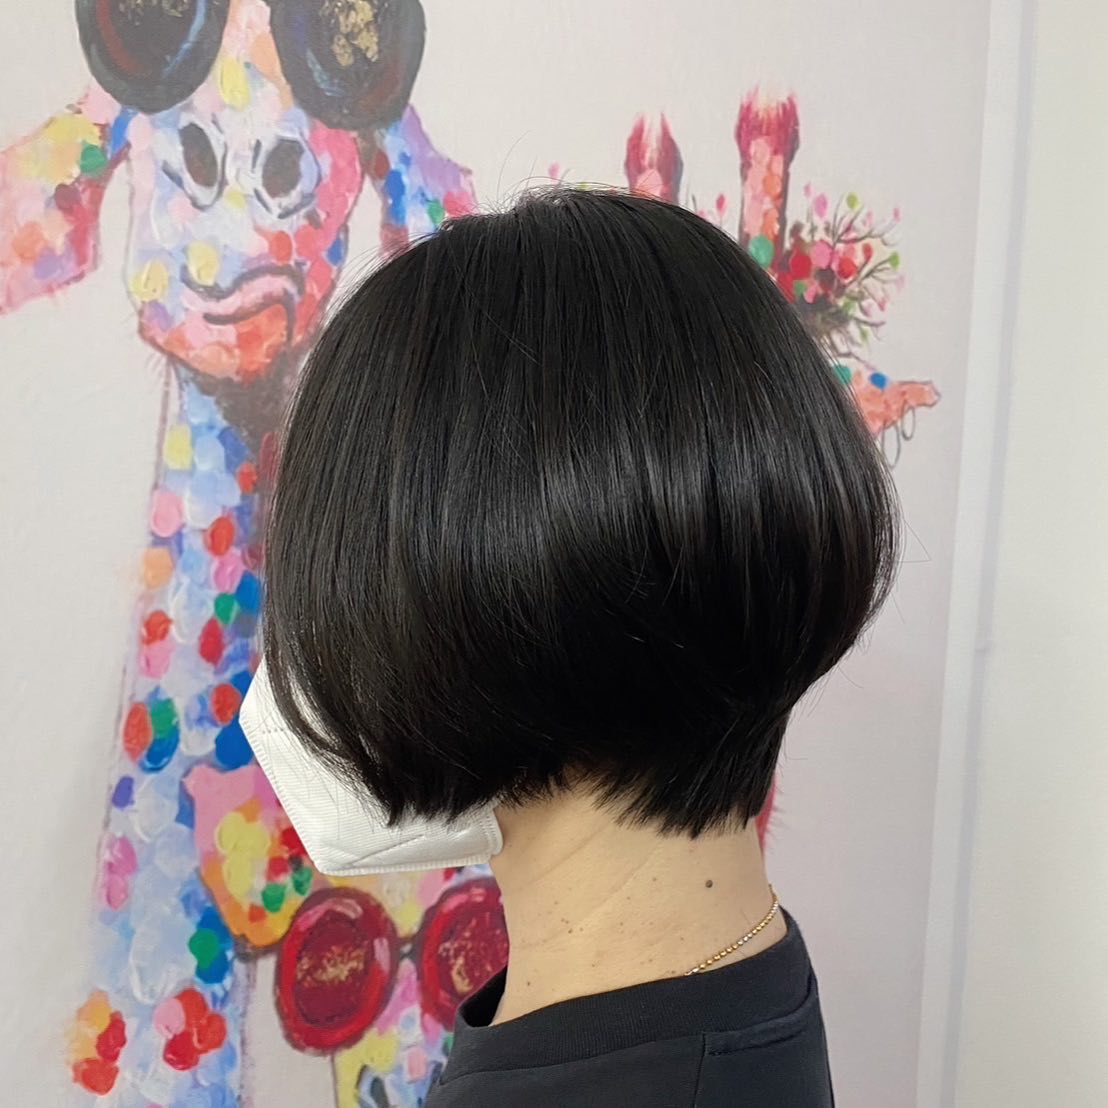 Cut+Plamai
ทำผมโดยช่างญา ช่างทำผมสไตล์ญี่ปุ่น 
️ Free parking available 
ร้านเปิดให้บริการ 9.00-18.30 
สำรองคิวได้ที่เบอร์
️02-662-7106
LINE account
https://lin.ee/3Cm0Ksiac  #coco106 # 106 hair # digitalperm # coolperm #color # hiligth #milbon #salon # beauty #treatment #straight #cut #soda shower # shot hair # long hair #japan # bangkok #sukhumvit39 # #ร้านเสริมสวยในกรุงเทพ